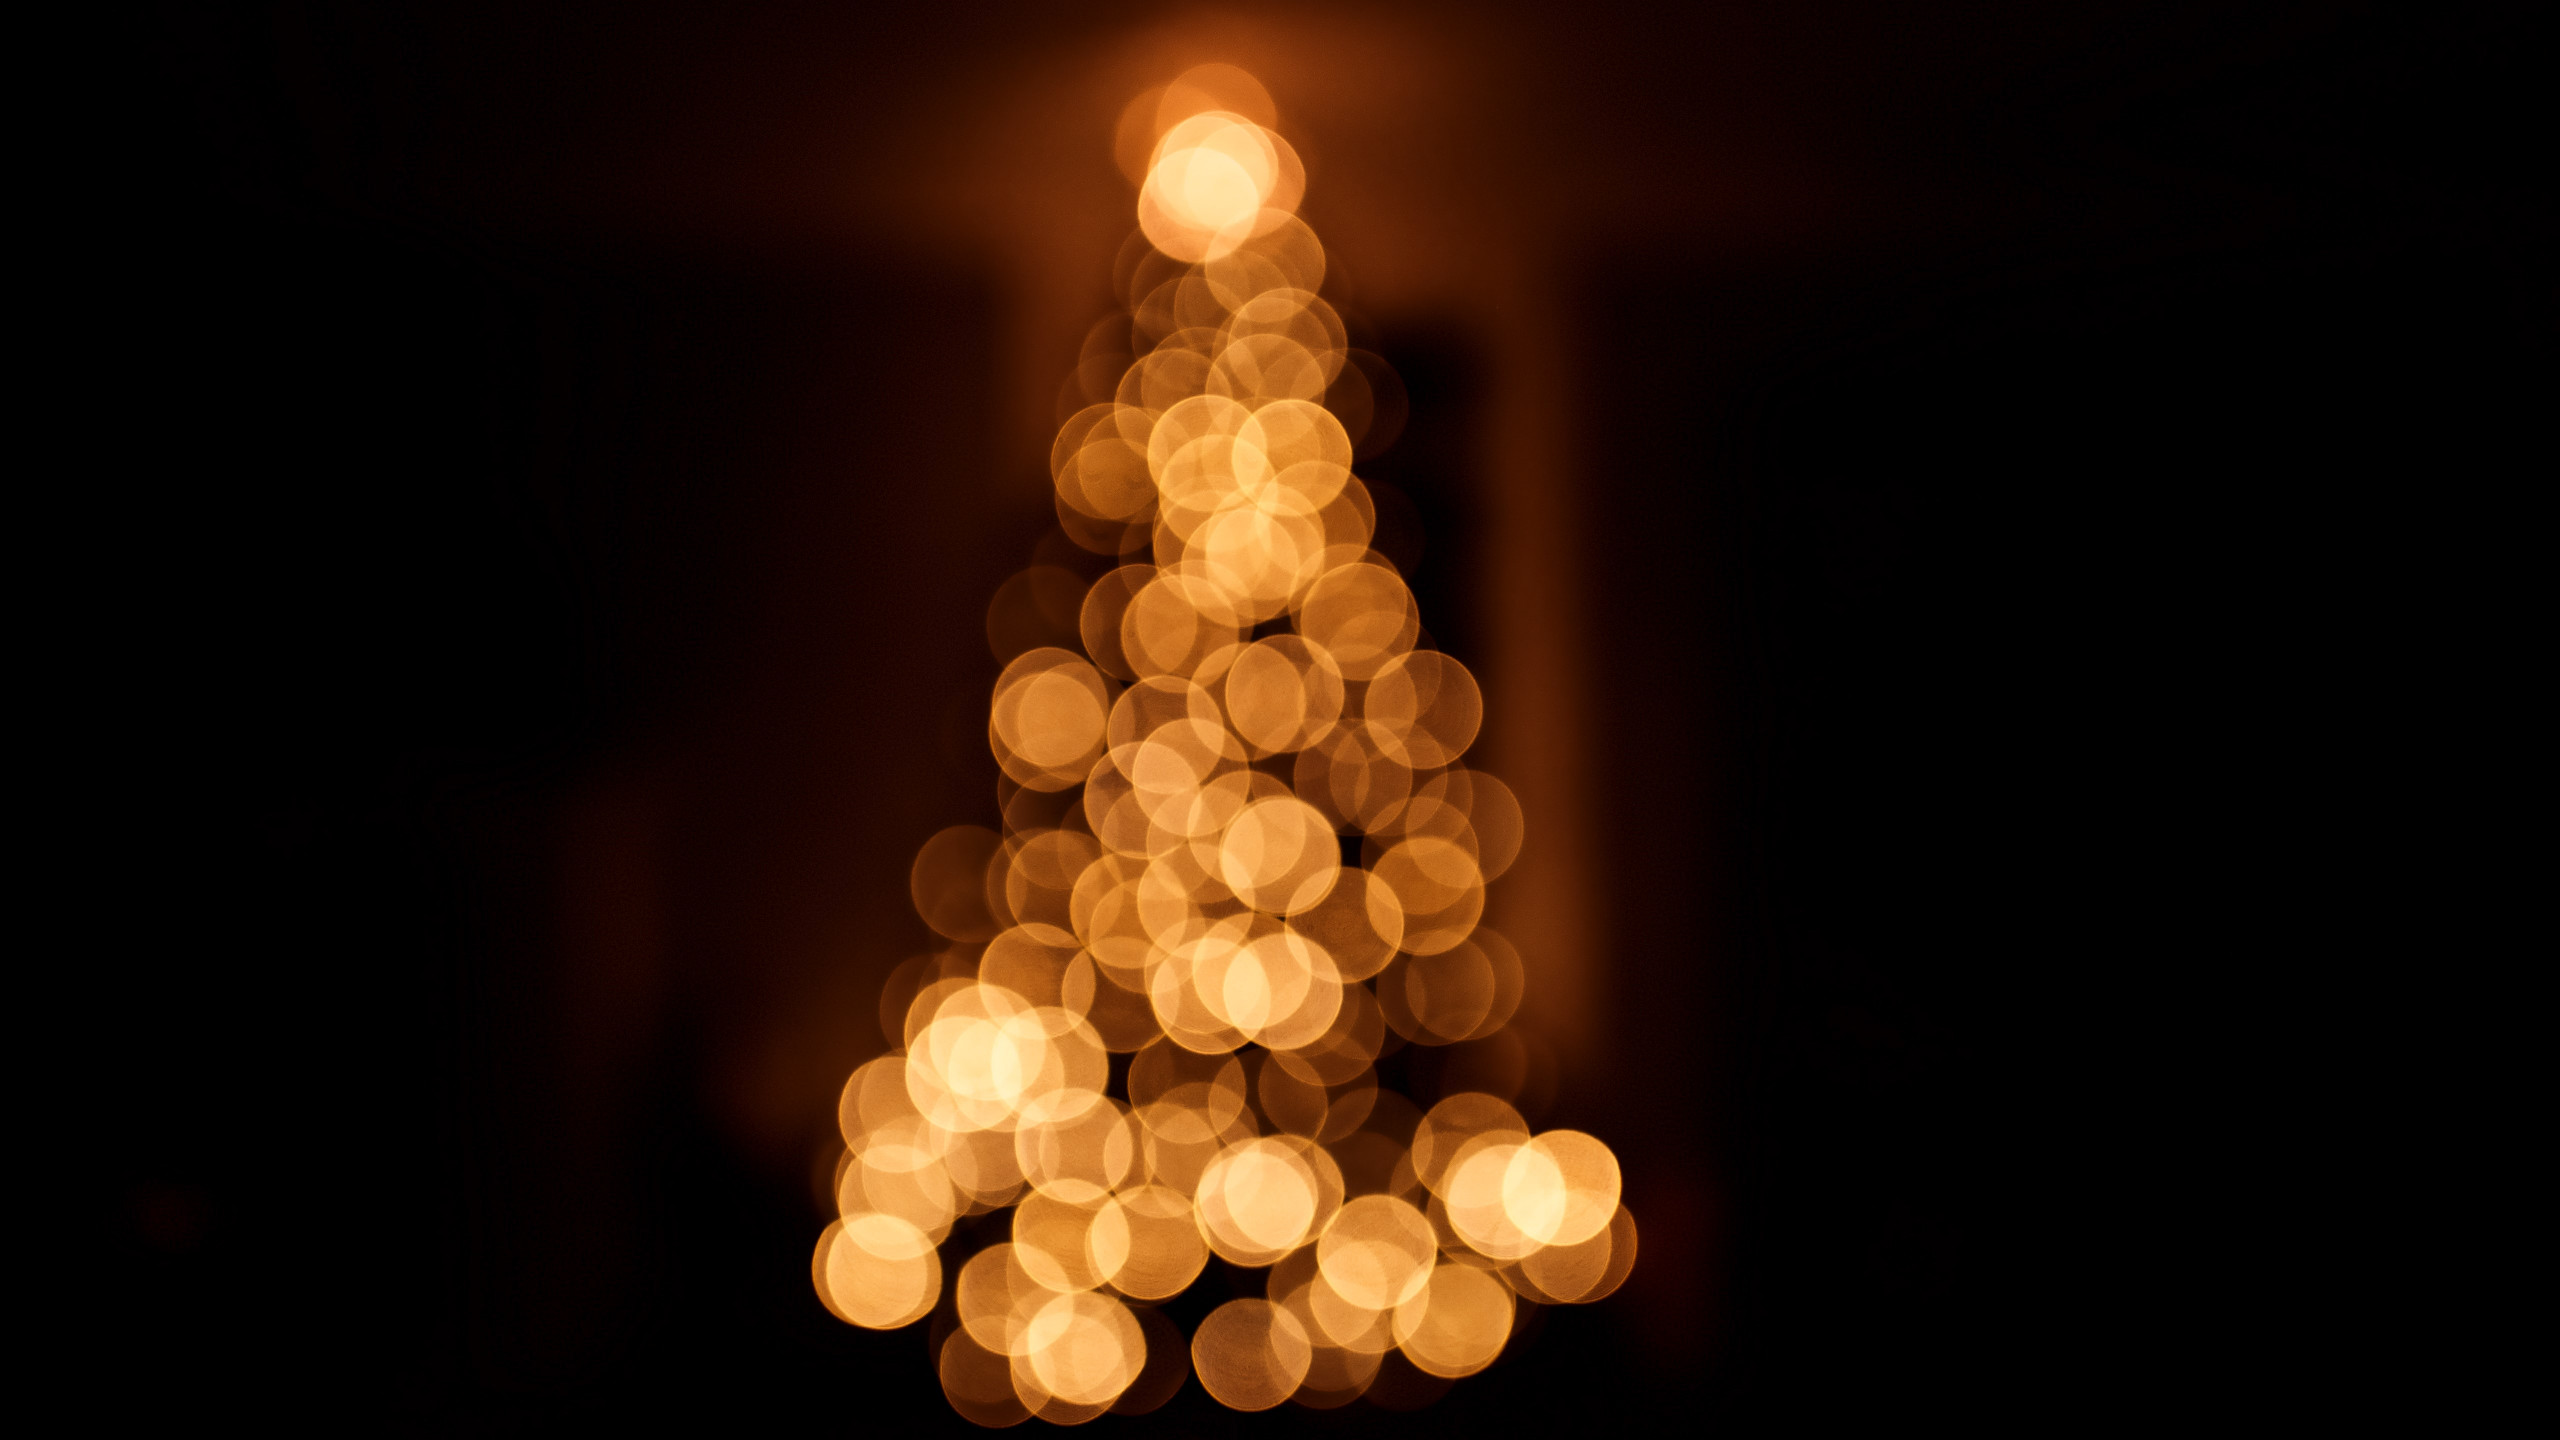 Download wallpaper: Bokeh Christmas tree 2560x1440